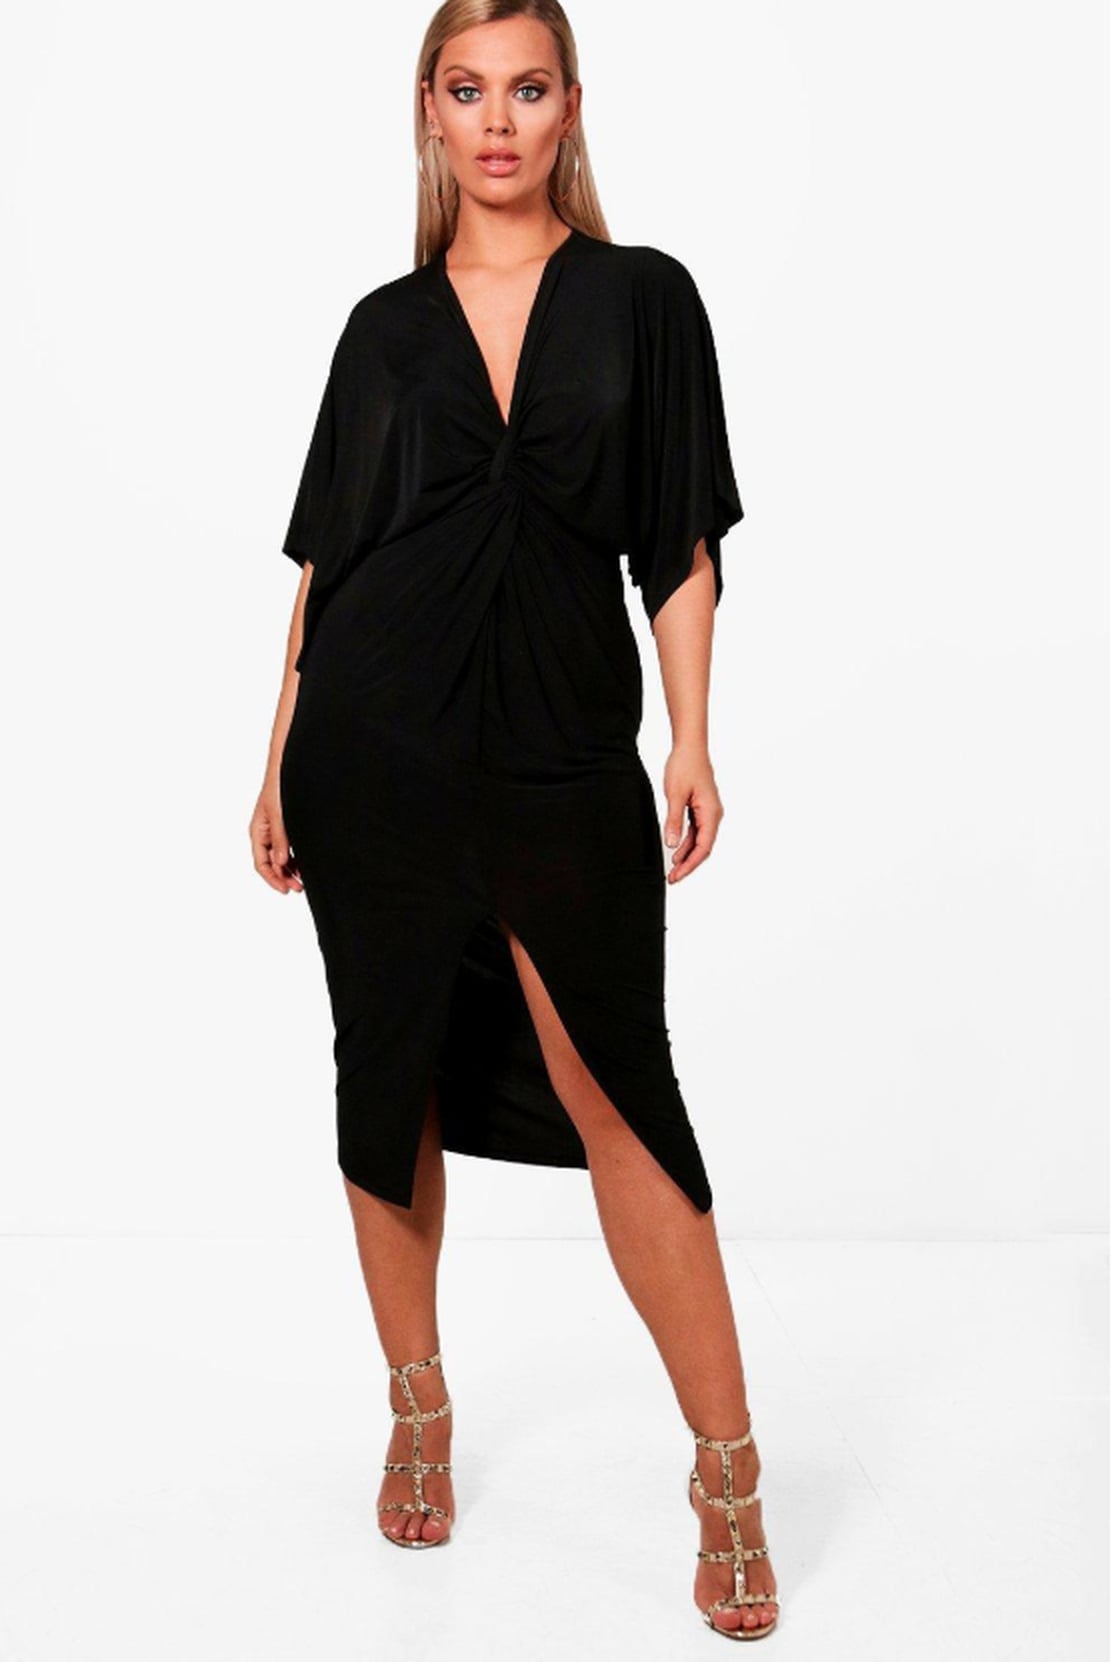 Victoria Beckham's Black Maxi Dress | POPSUGAR Fashion